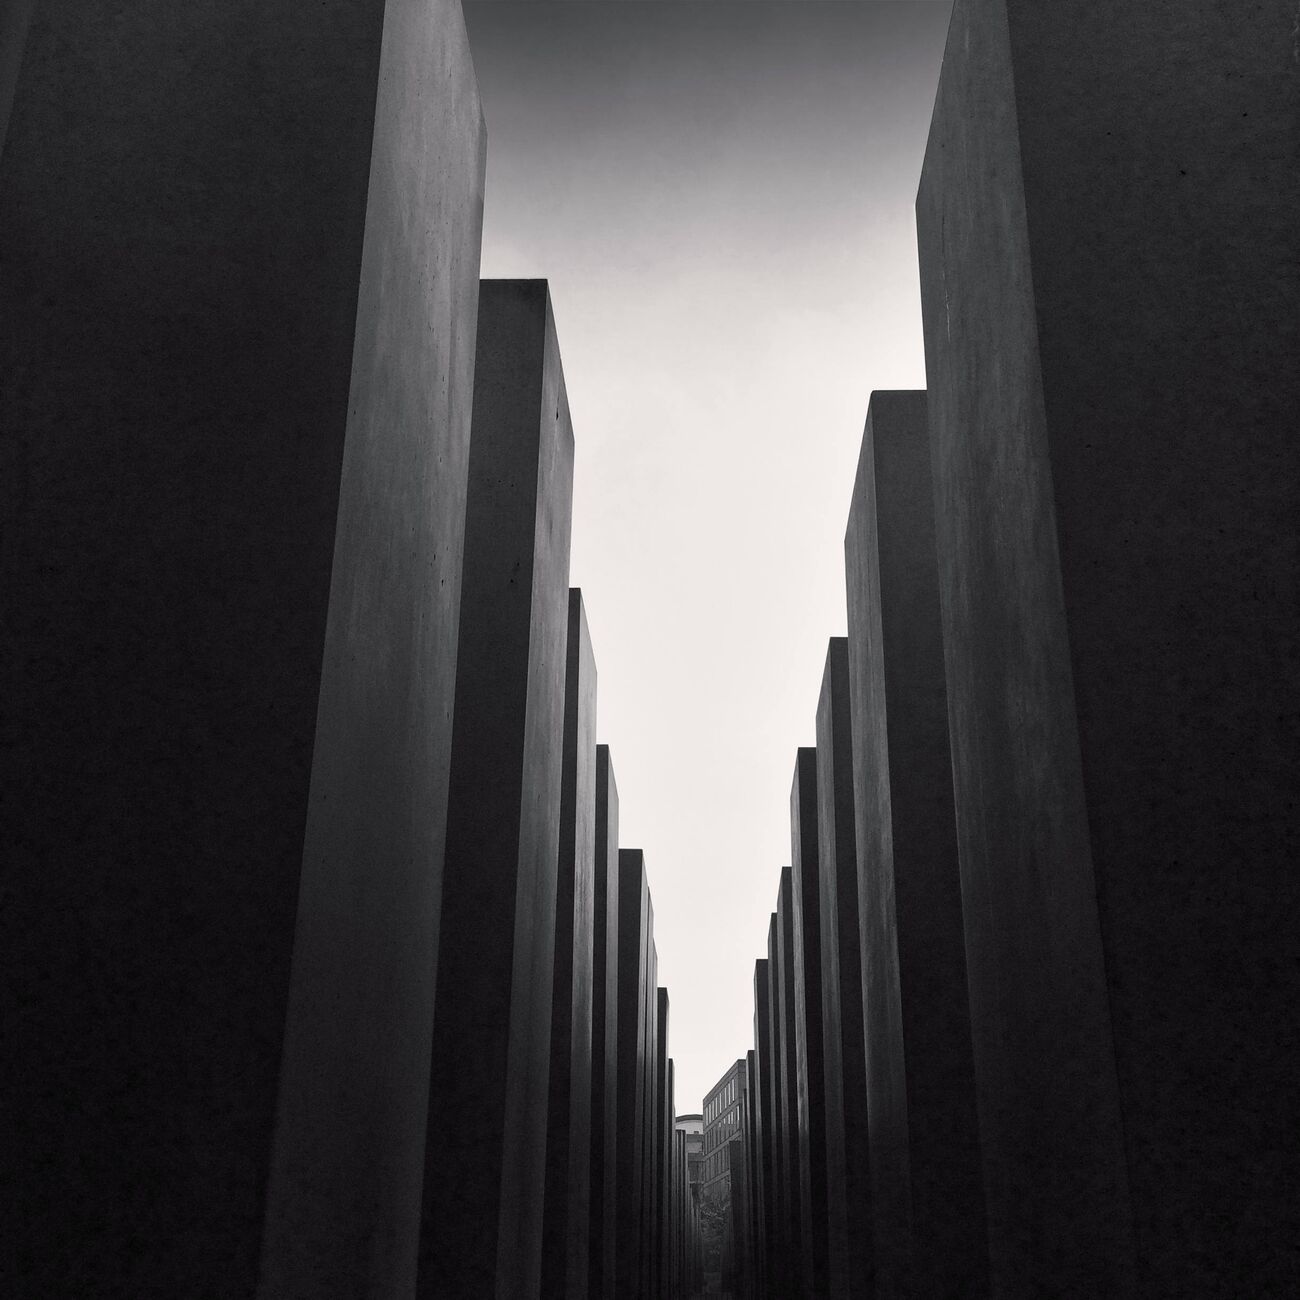 The Jews Memorial, Study 1, Berlin, Allemagne. Octobre 2014. Ref-11466 - Denis Olivier Photographie